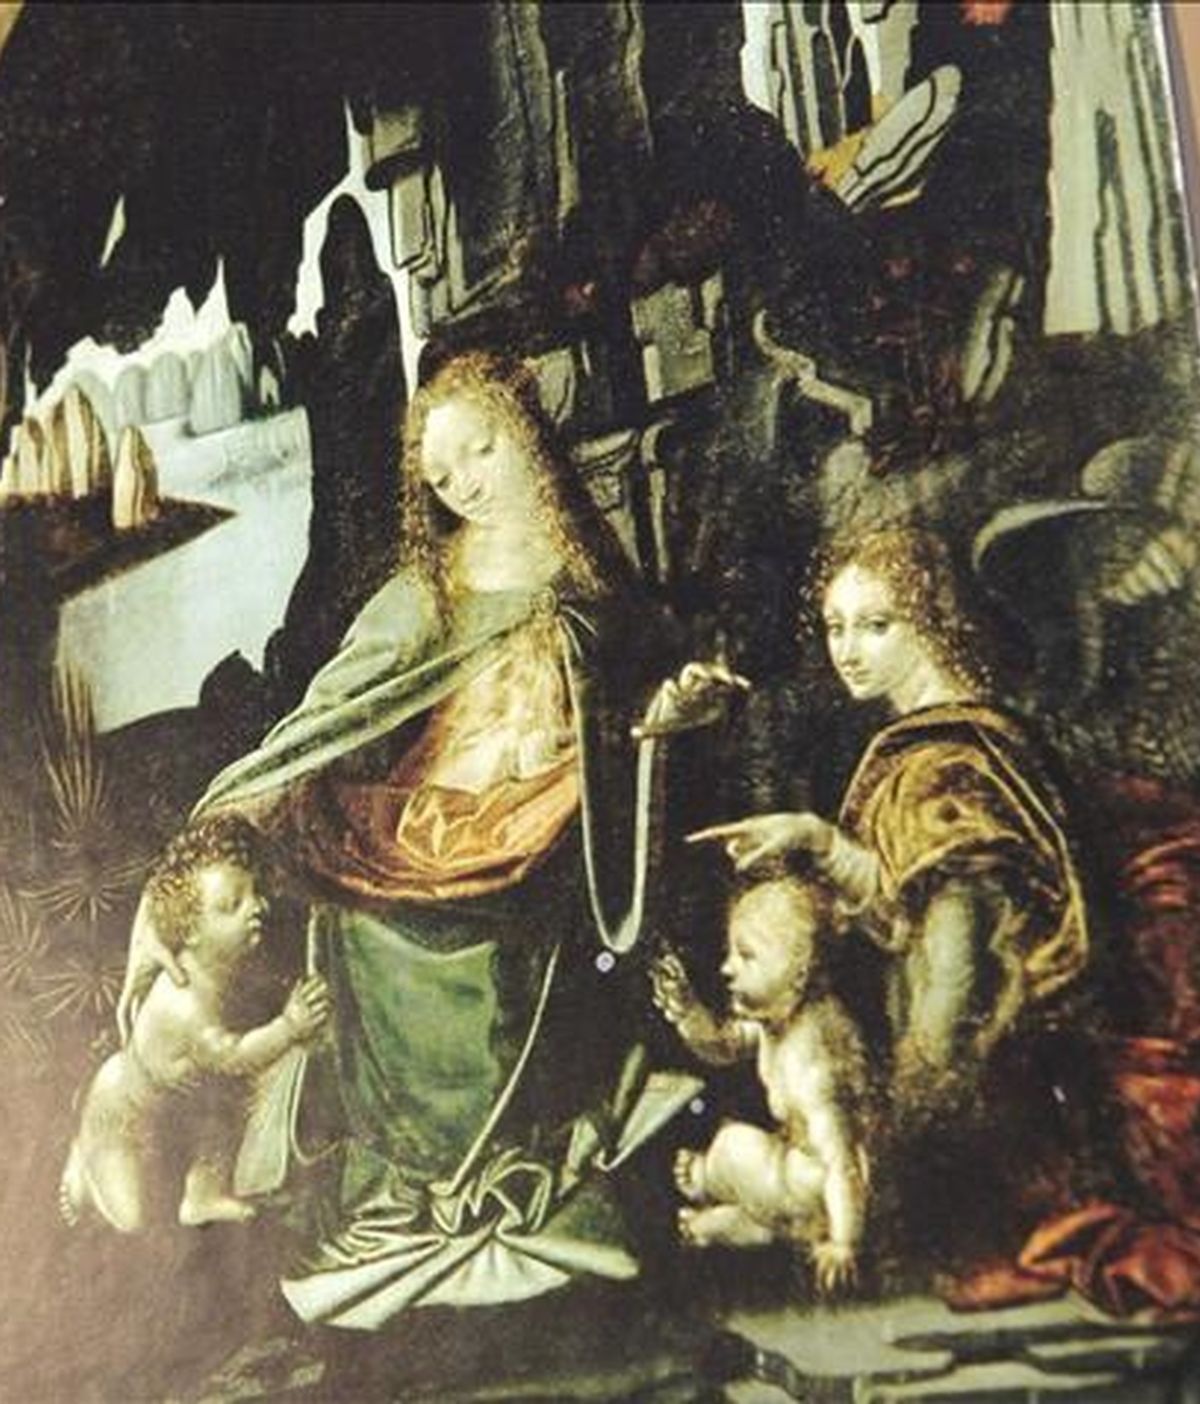 En la imagen, la obra "La virgen de las rocas", de Leonardo da Vinci. EFE/Archivo